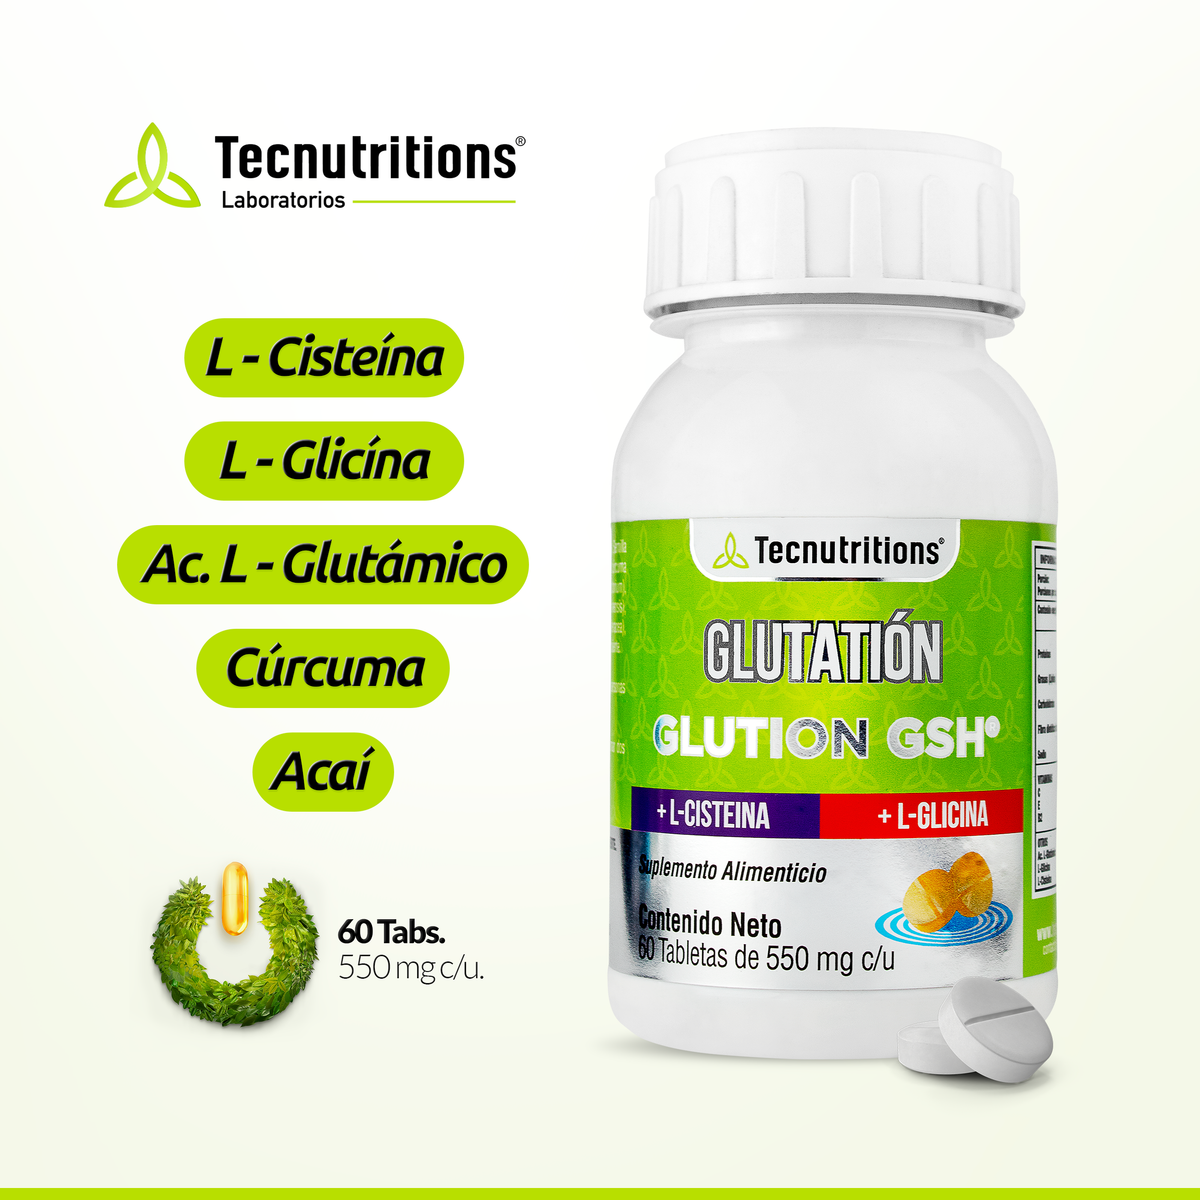 Suplemento alimenticio, Glutatión Glution GSH, 60 tabs, con l-glutámico, l-glicina, l-cisteina